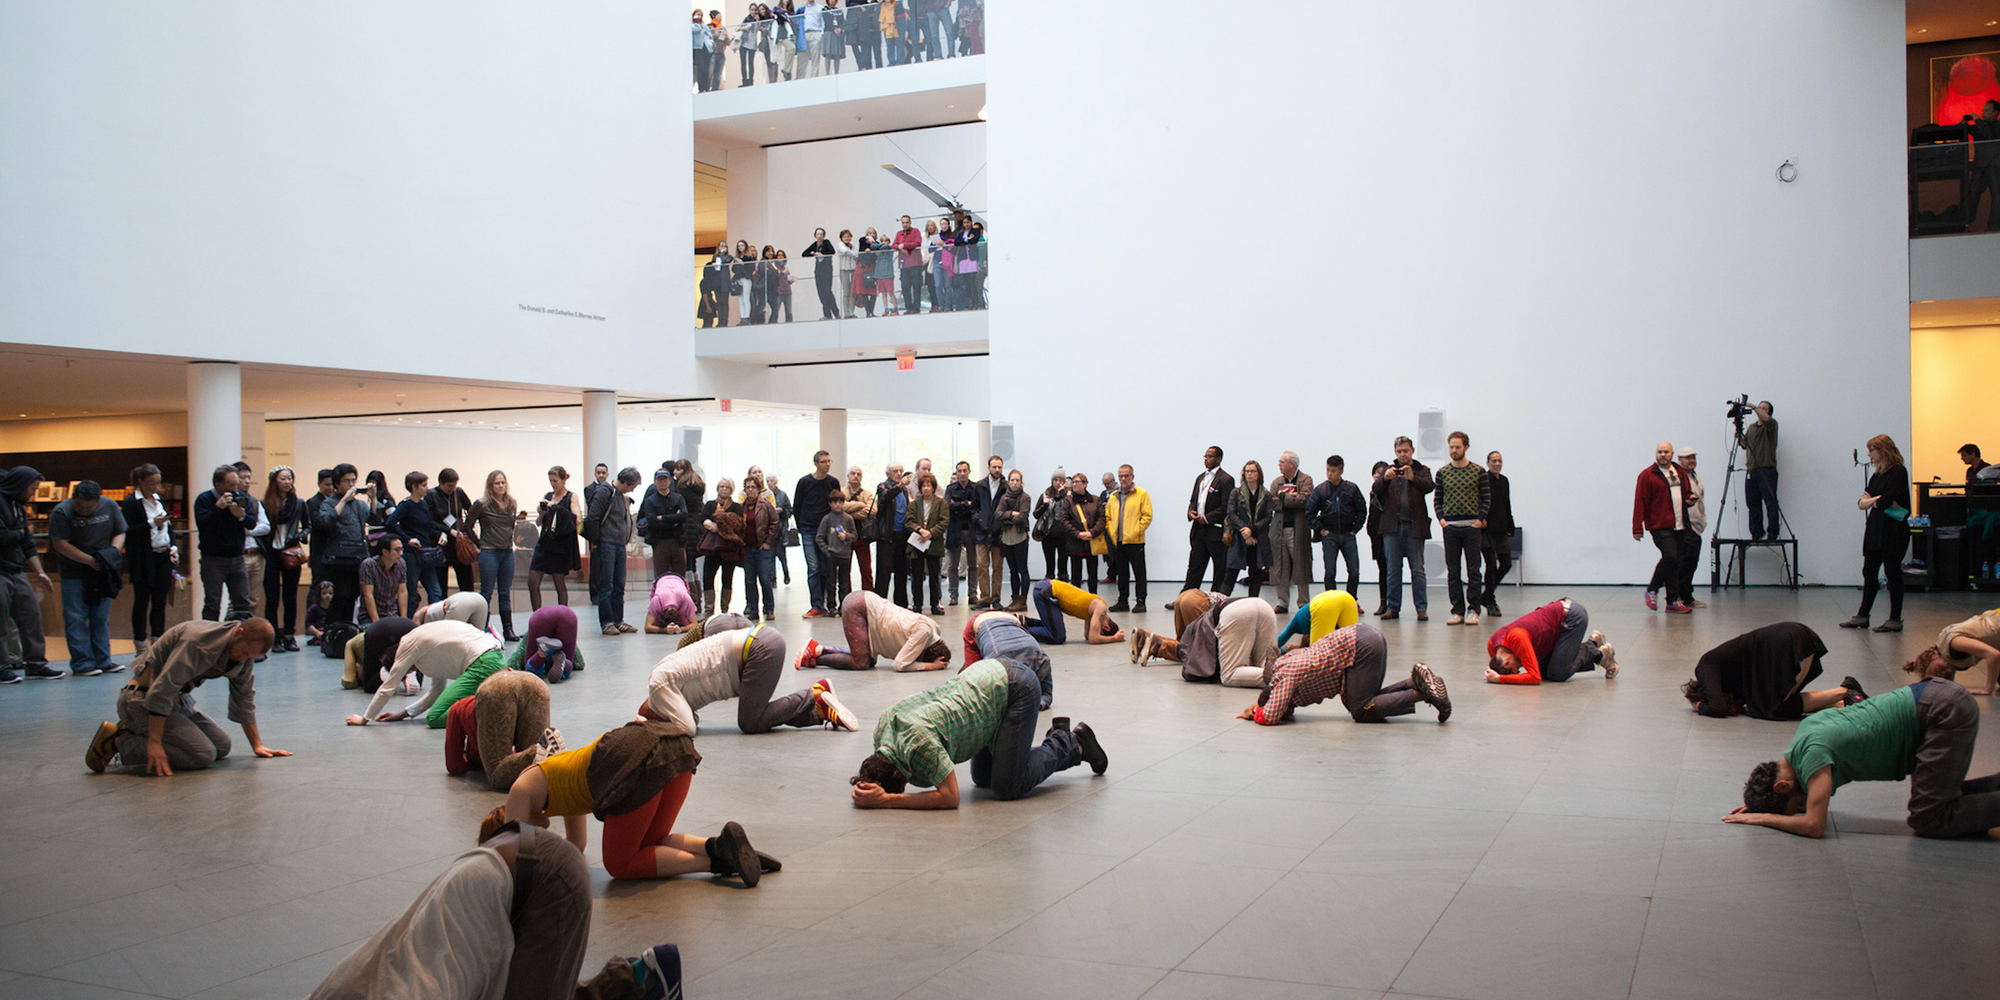 Boris Charmatz. Levée des conflits, performed as part of Musée de la dance: Three Collective Gestures, October 18–20, 2013. Photo: Julieta Cervantes